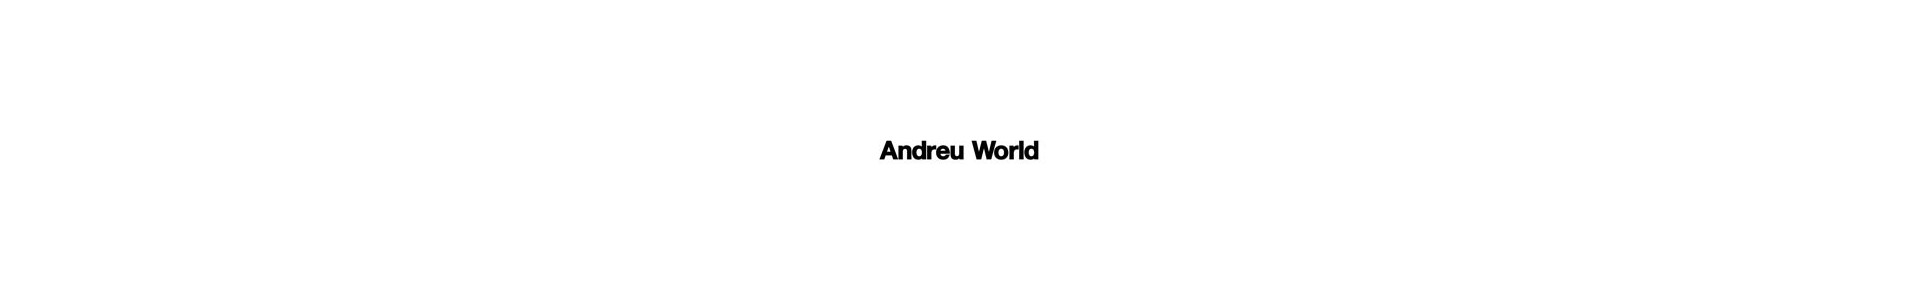 Andreu World: Catálogo Sillas y mesas modernas - Muebles Lluesma